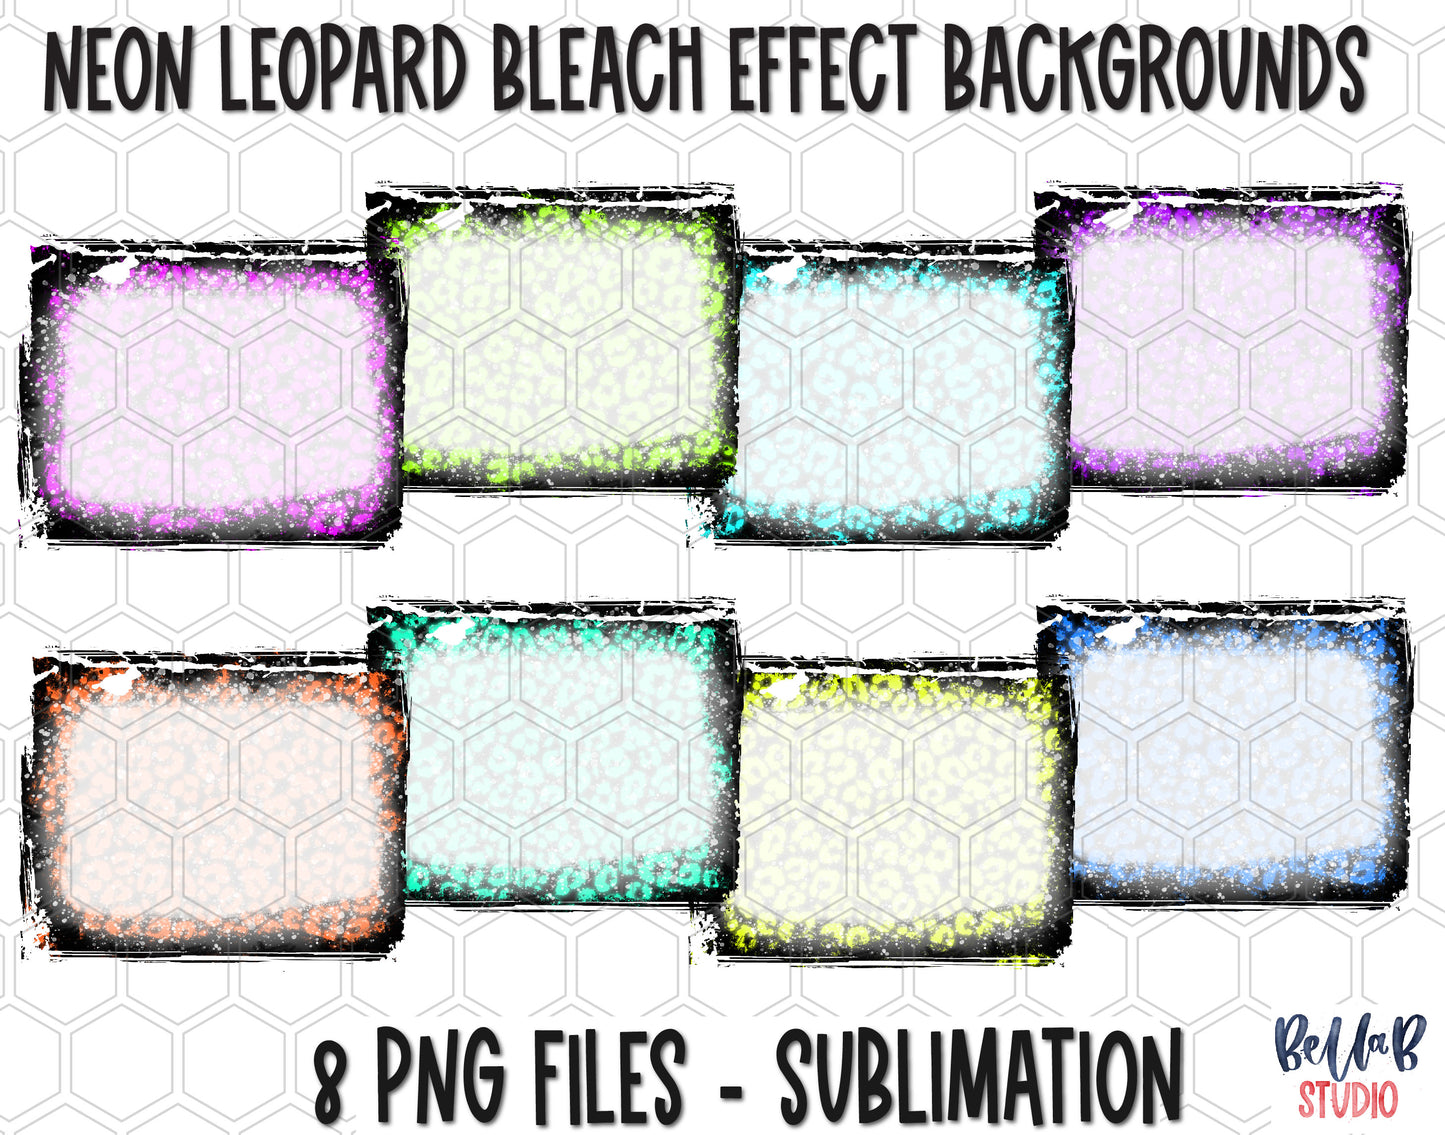 Neon Leopard Bleach Effect Sublimation Background Bundle, Backsplash